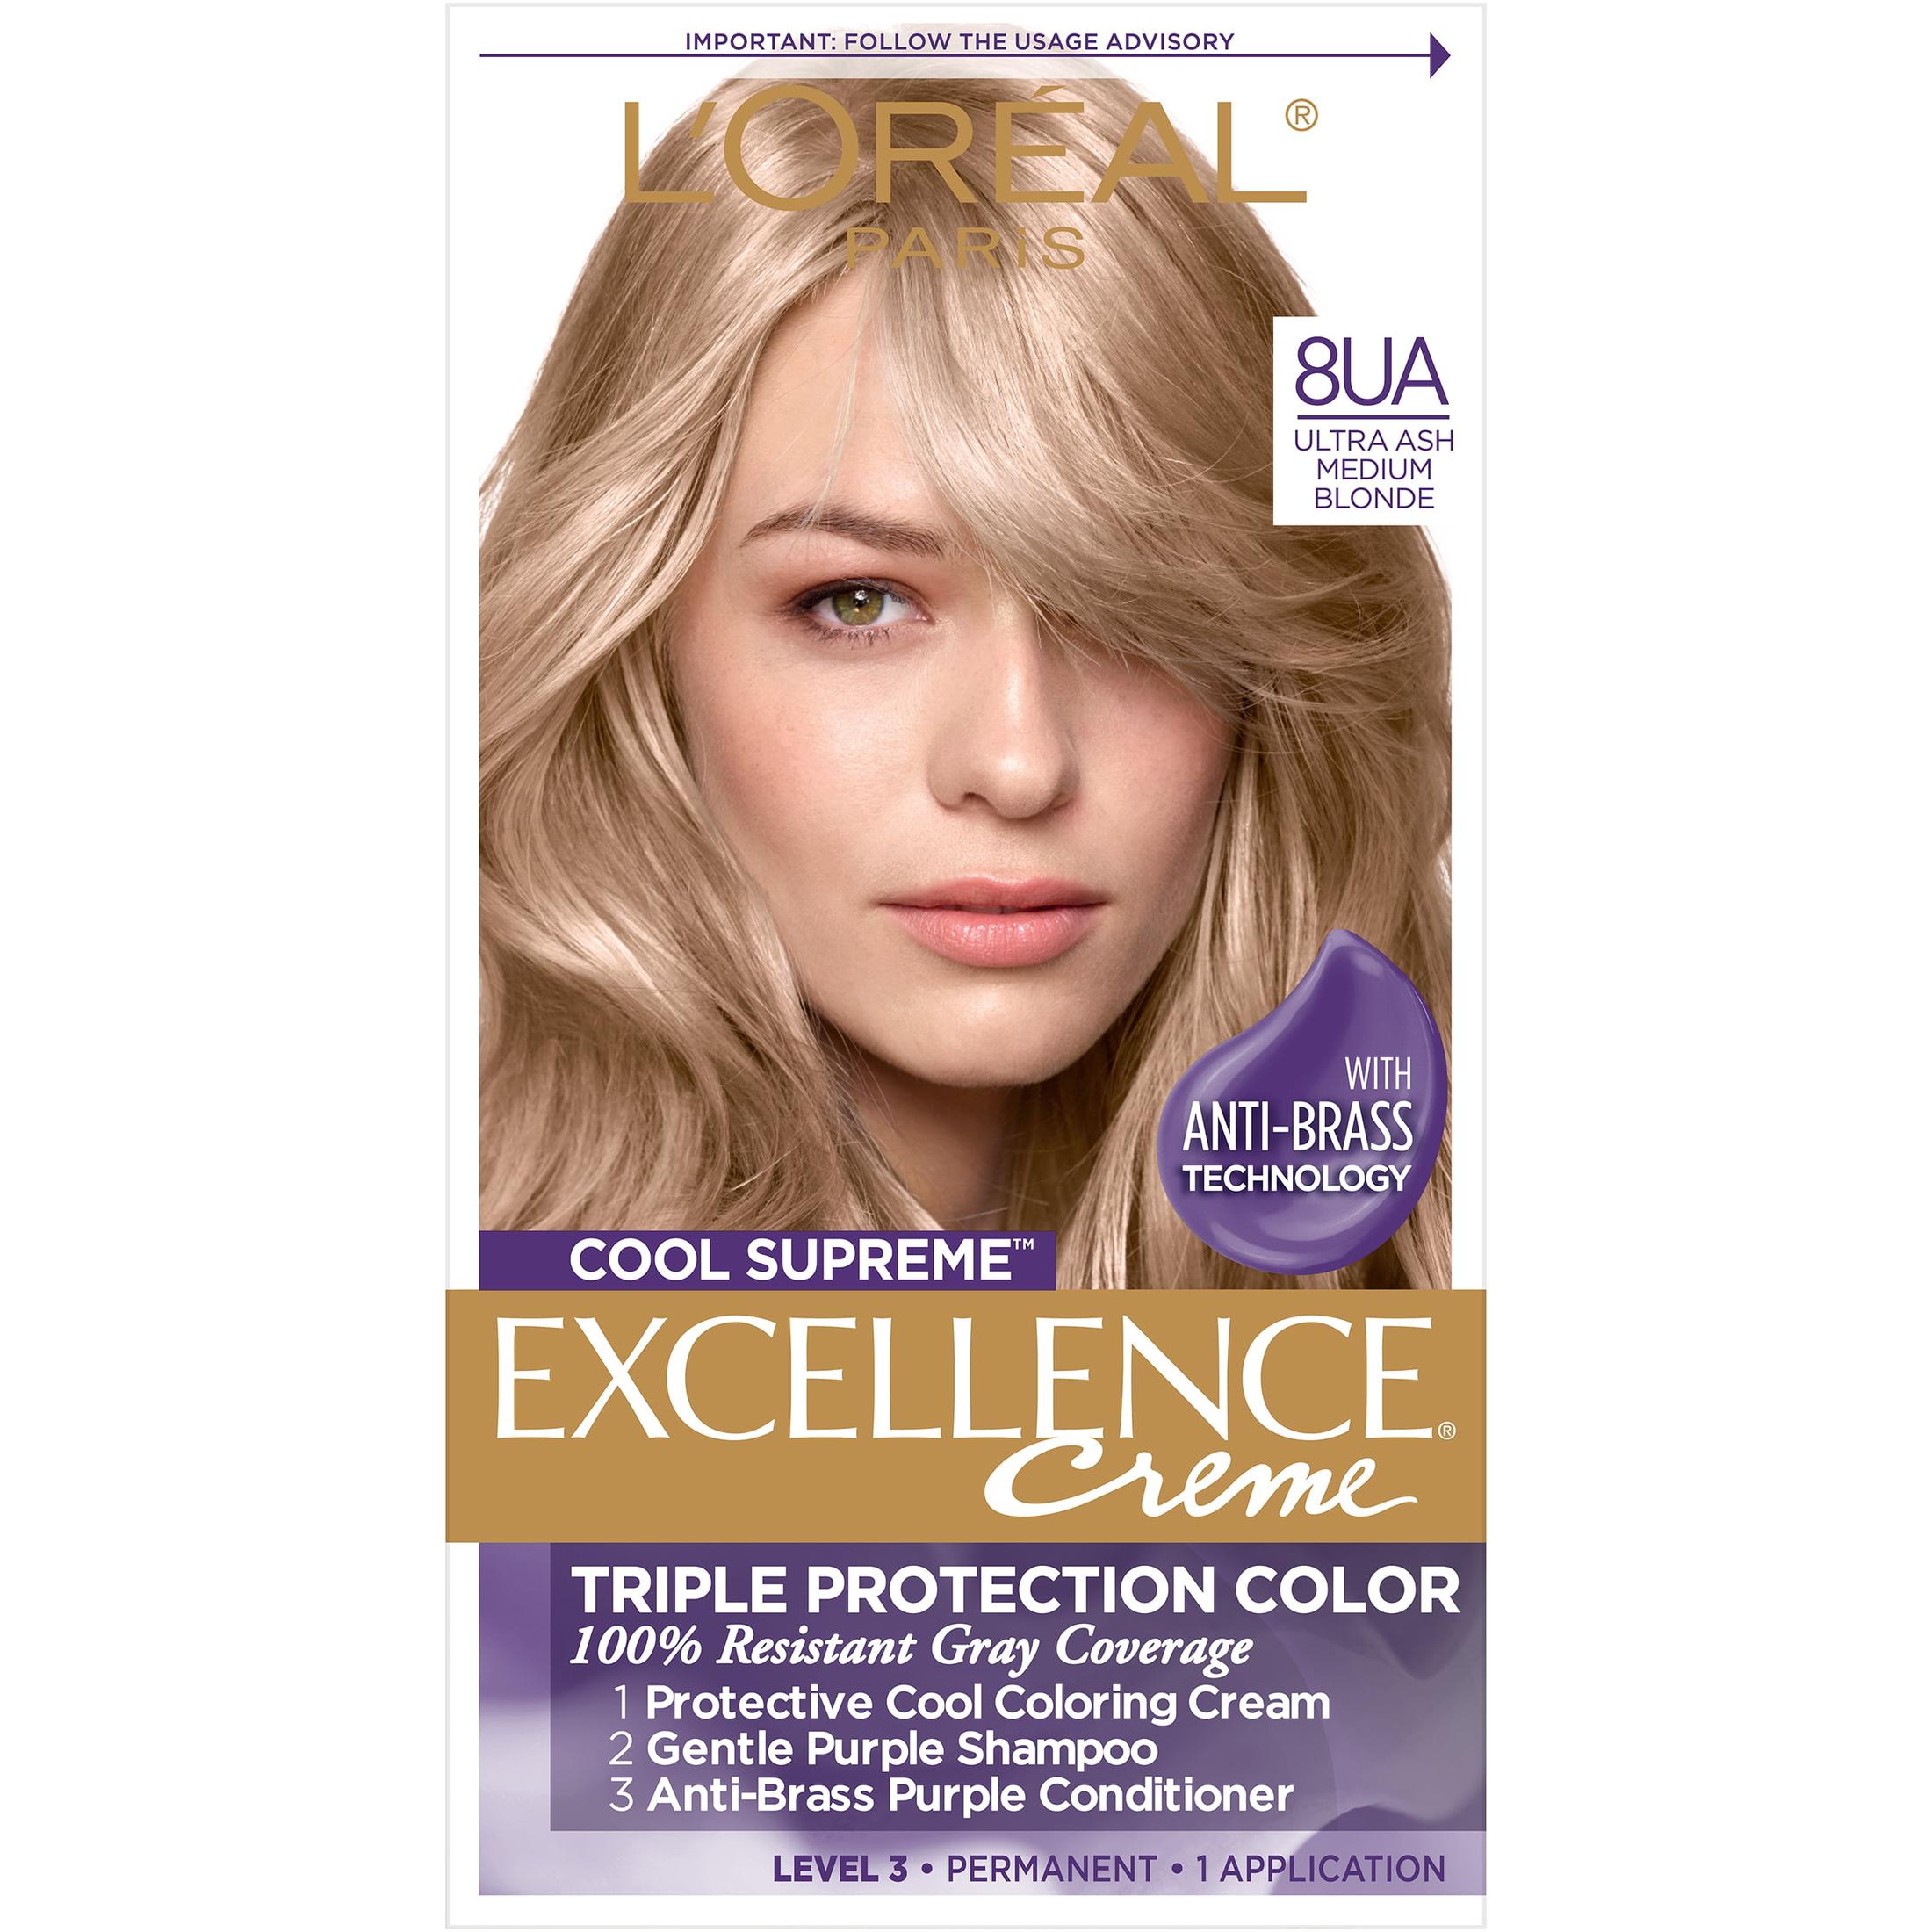 L'Oreal Paris Excellence Creme Permanent Hair Color, Ultra Ash Medium Blonde - image 3 of 10